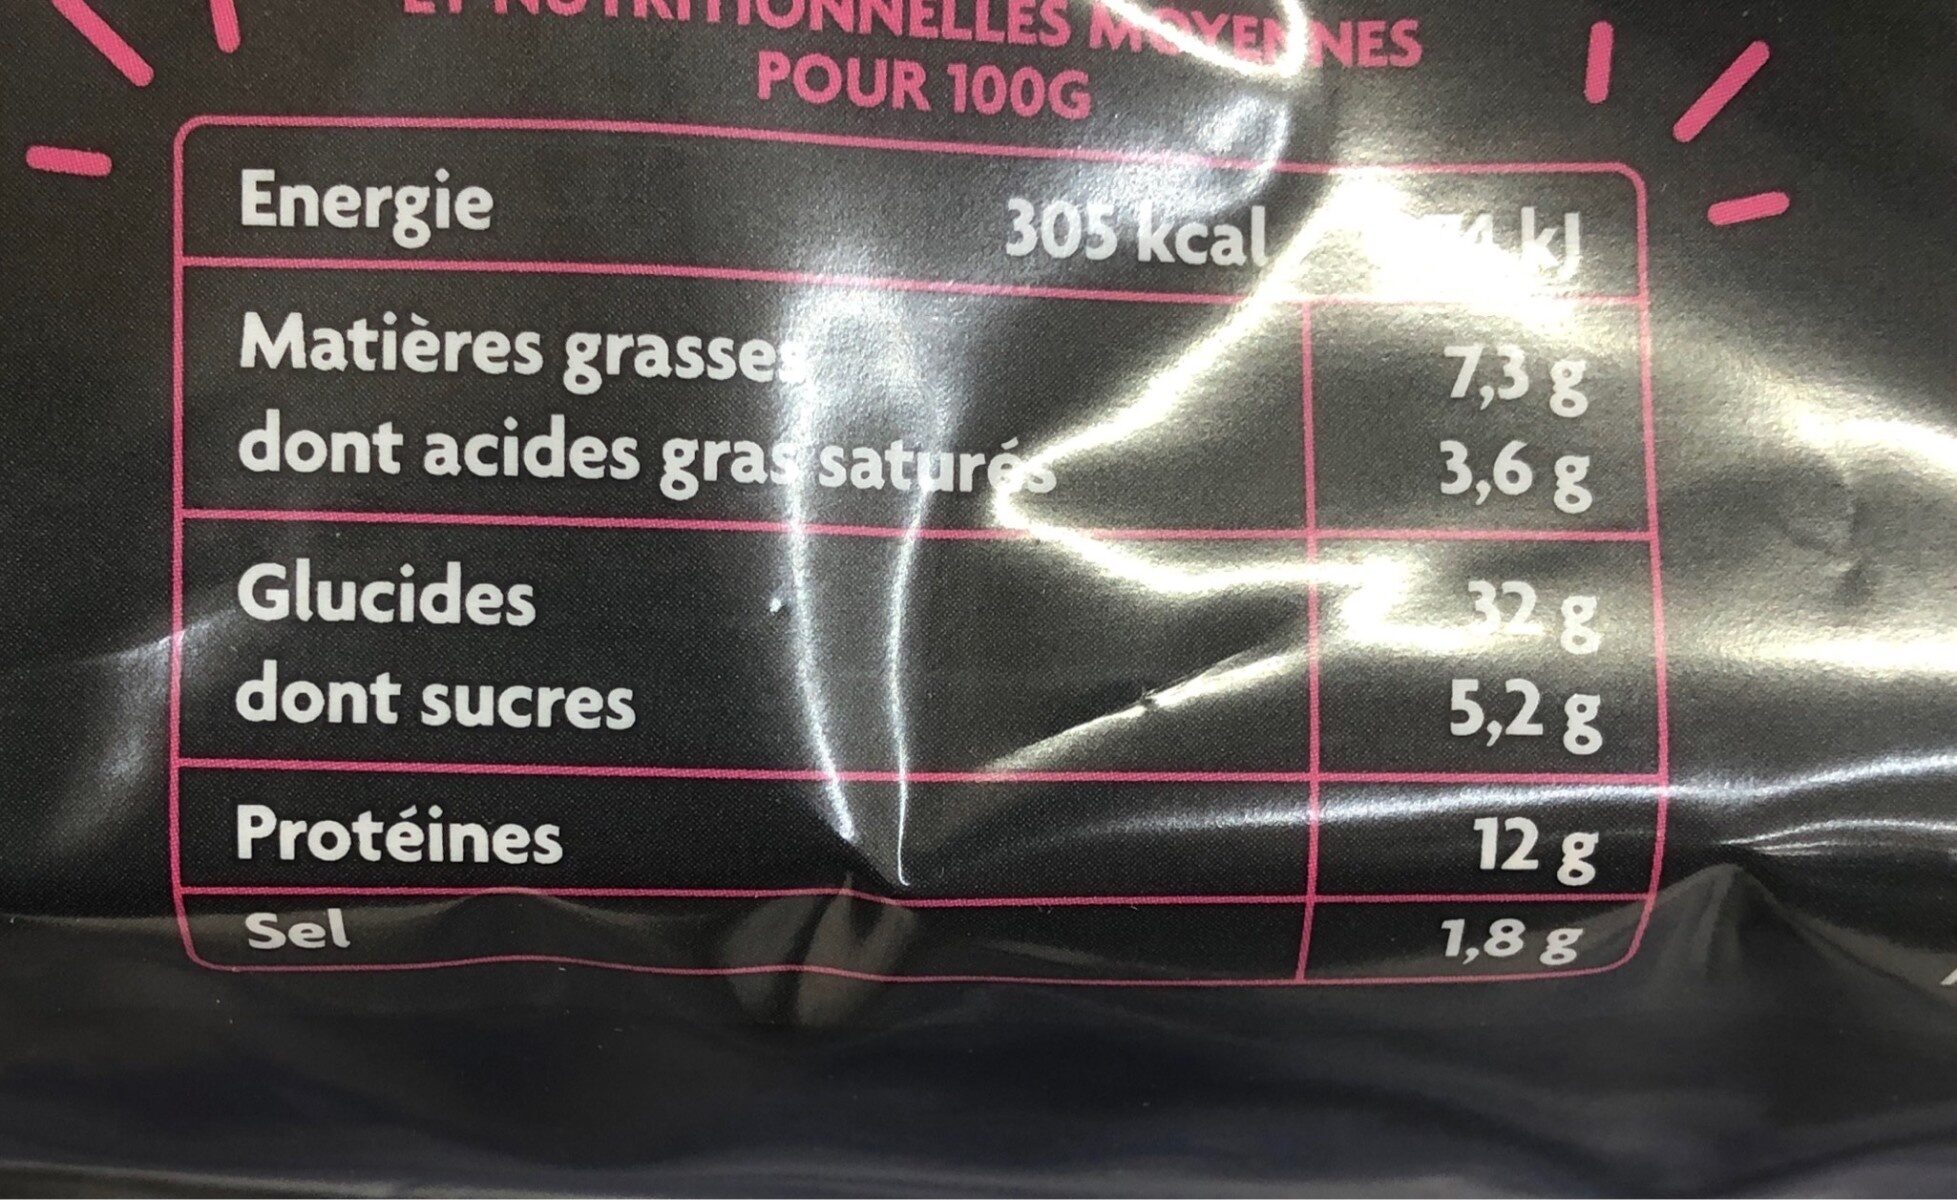 Lustucru croque-monsieur spécial micro-ondes jambon fromage 145g - Valori nutrizionali - fr